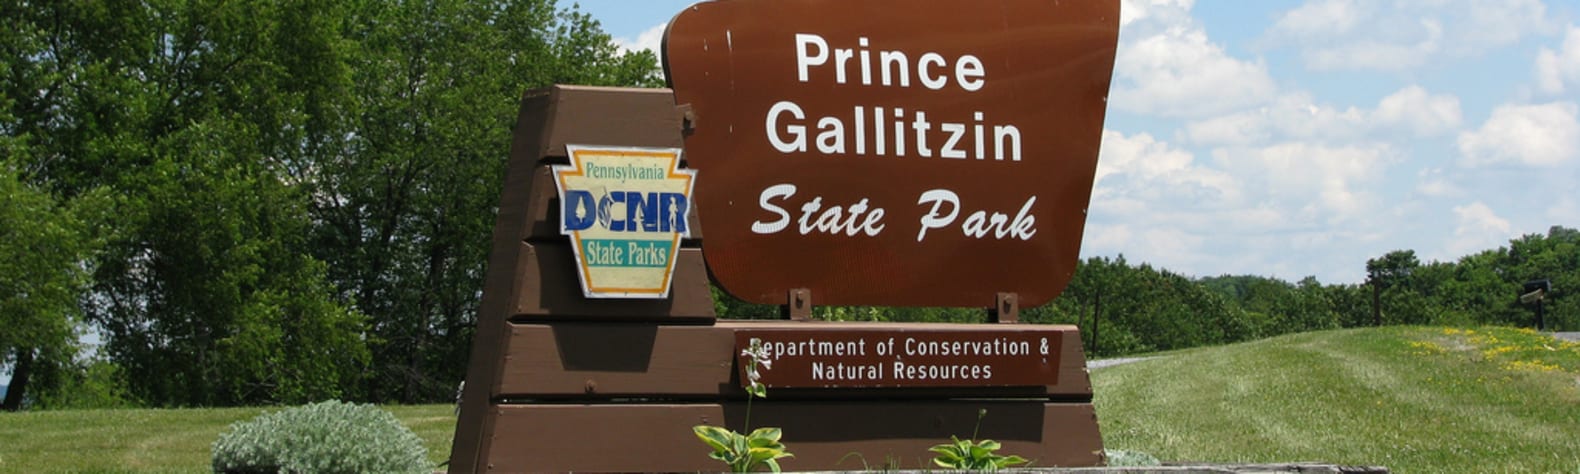 Prince Gallitzin State Park